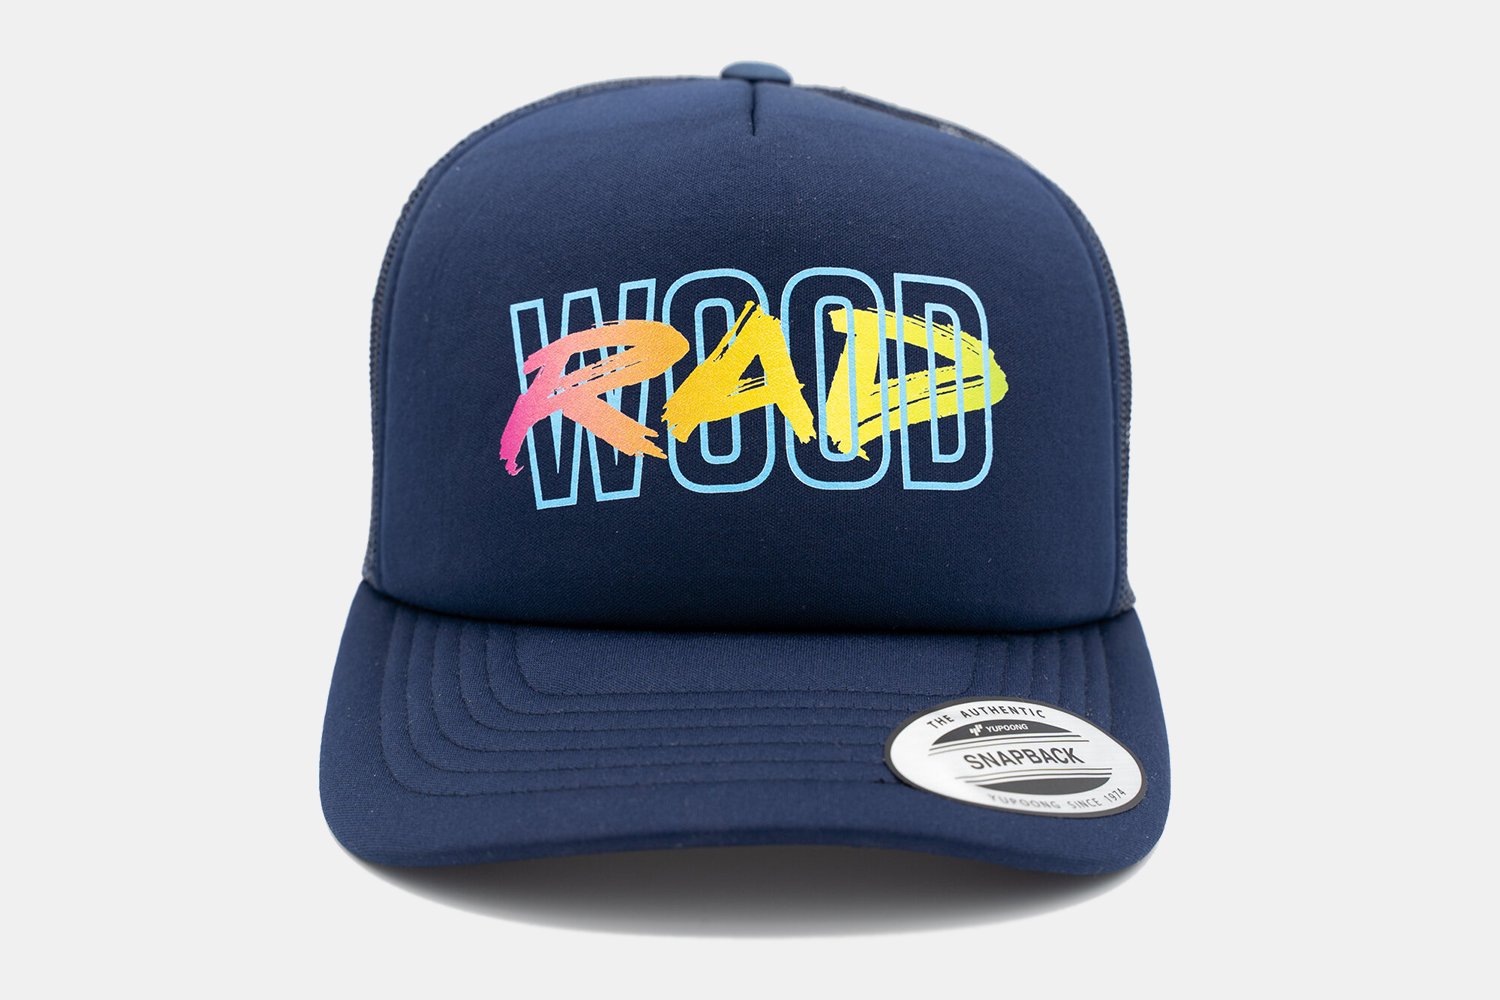 Radwood Trucker Hat